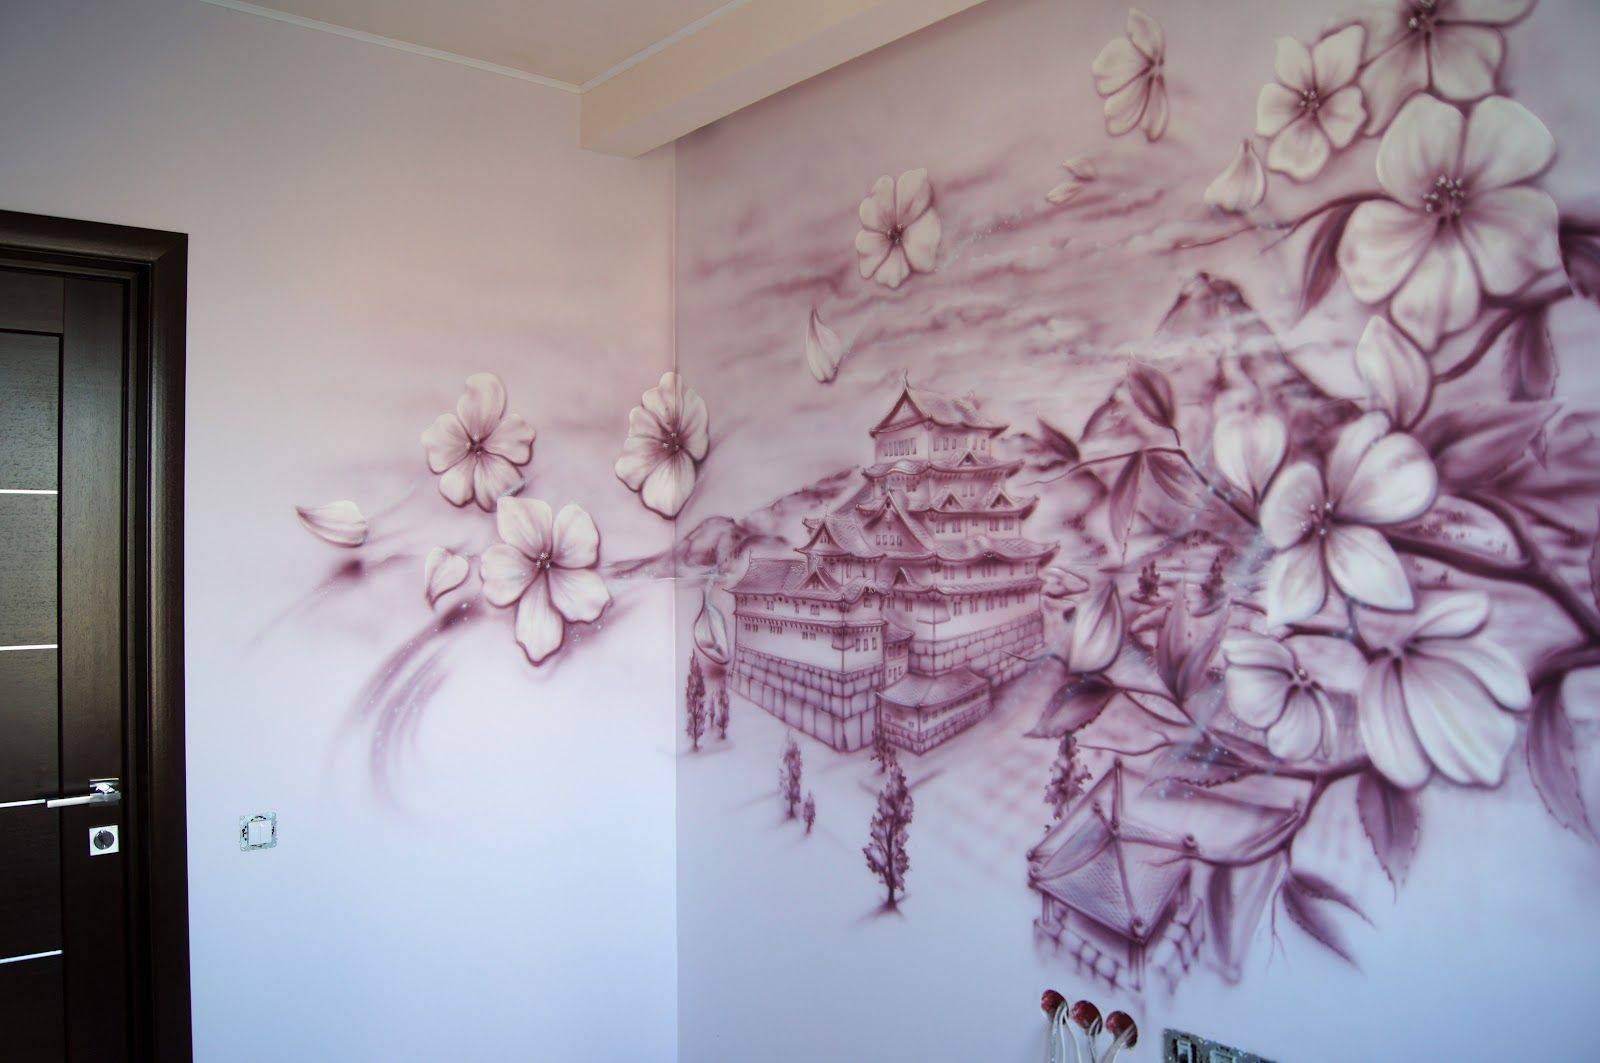 Рисунки на стенах в квартире, 3д рисунки своими руками, как самому нарисовать на стене в квартире